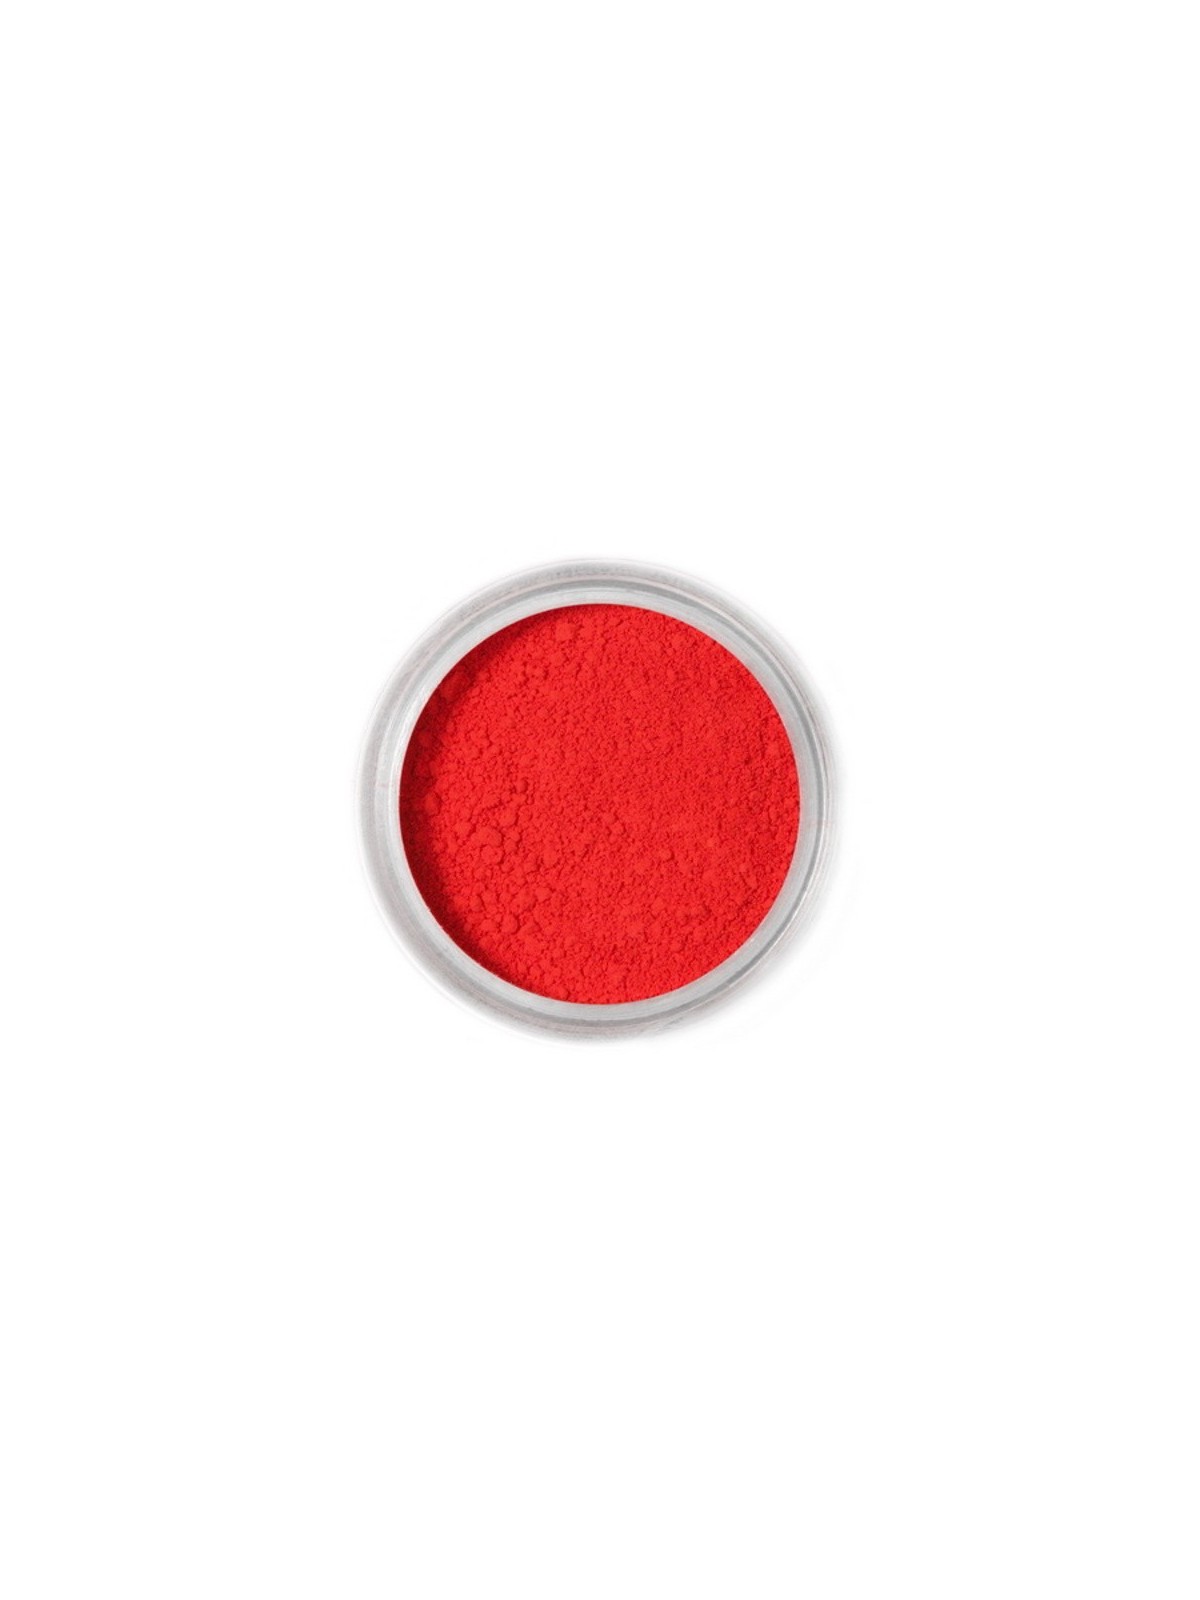 Jadalna farba proszkowa Fractal - Cherry Red, Csereszney red (2,5 g)